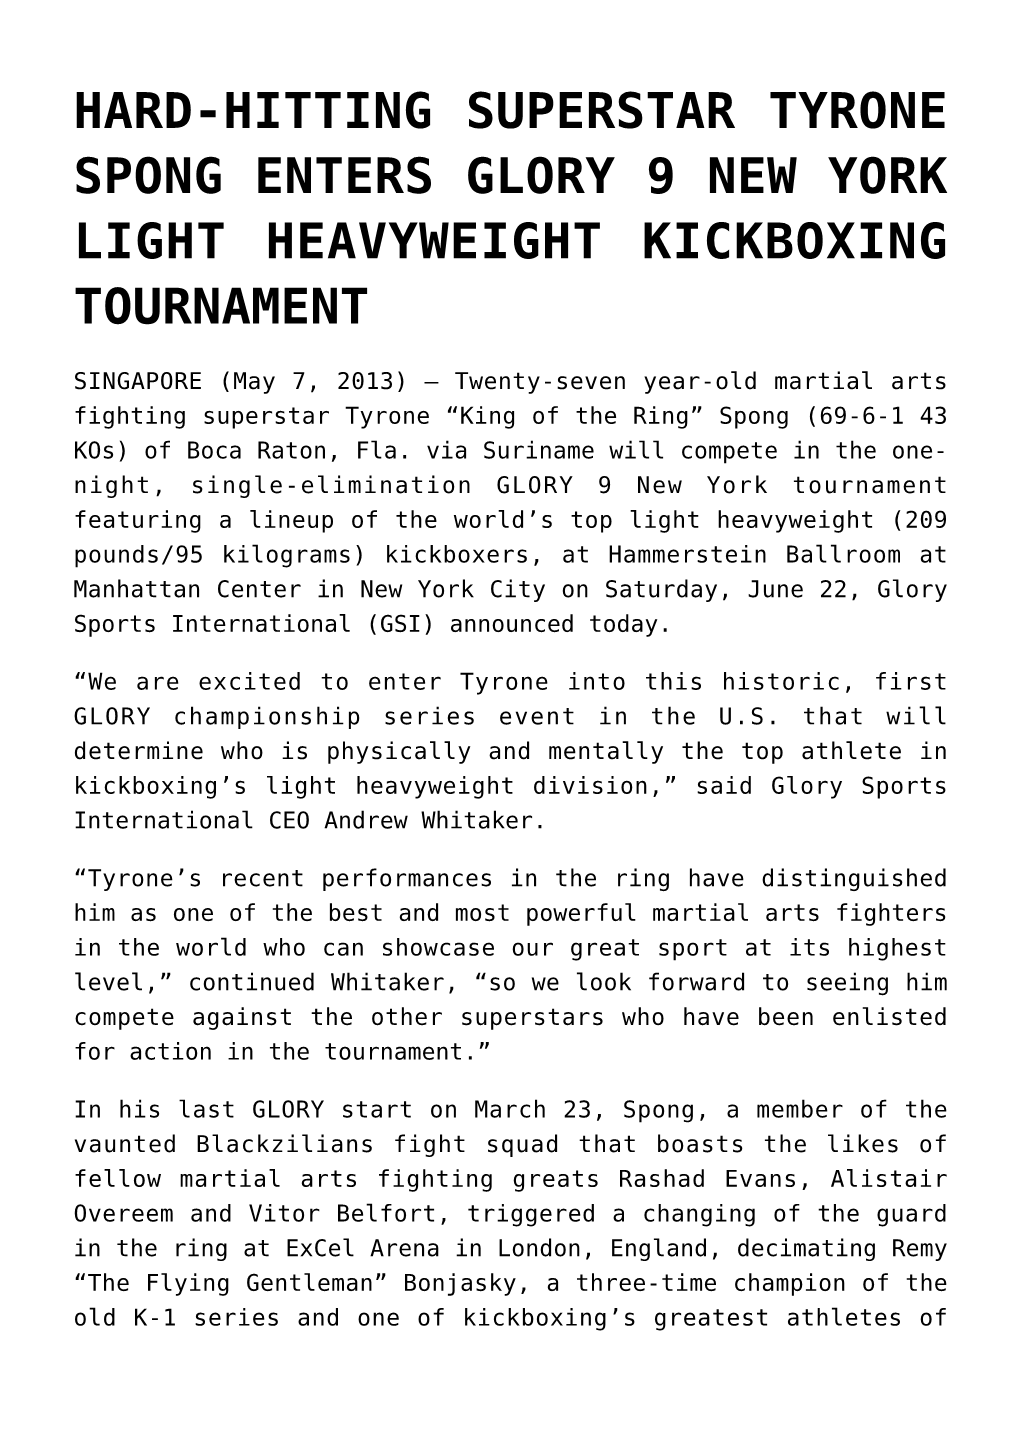 Hard-Hitting Superstar Tyrone Spong Enters Glory 9 New York Light Heavyweight Kickboxing Tournament